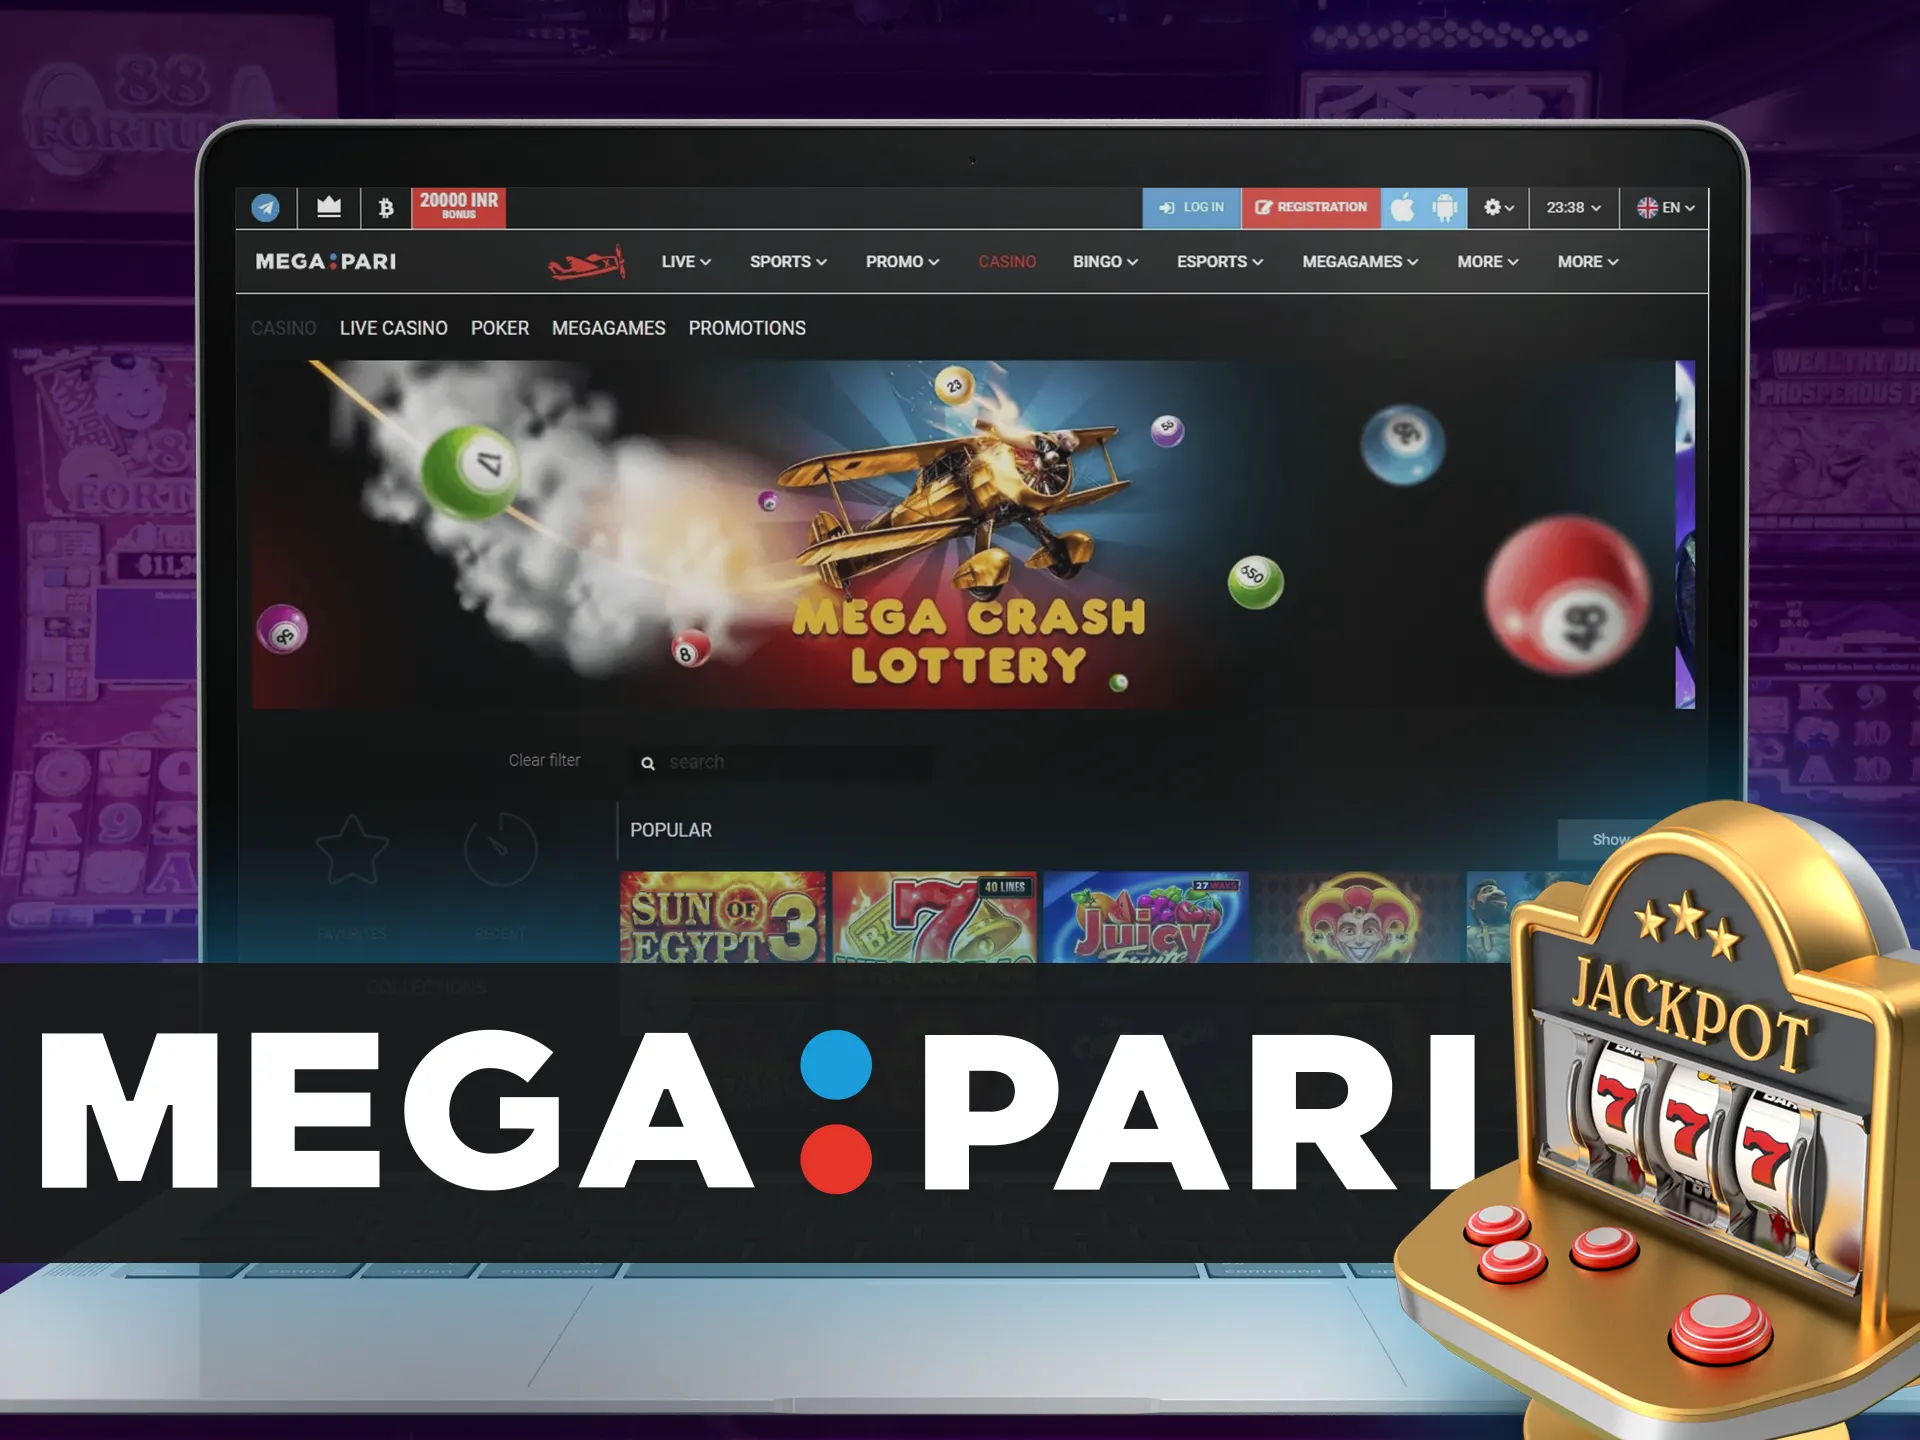 With Megapari, choose any slots to play at the casino.